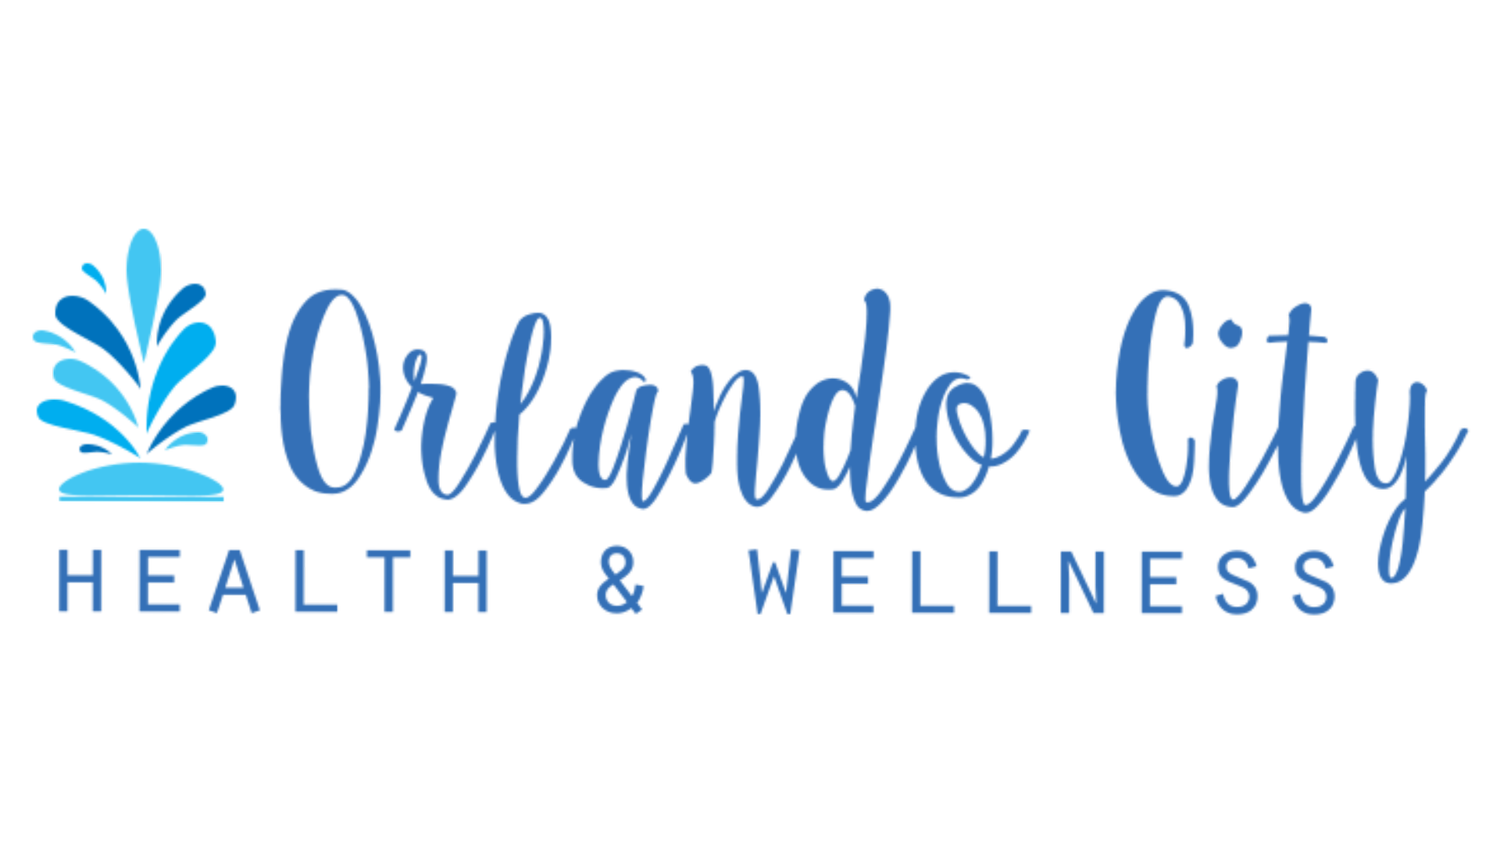 Orlando City Health